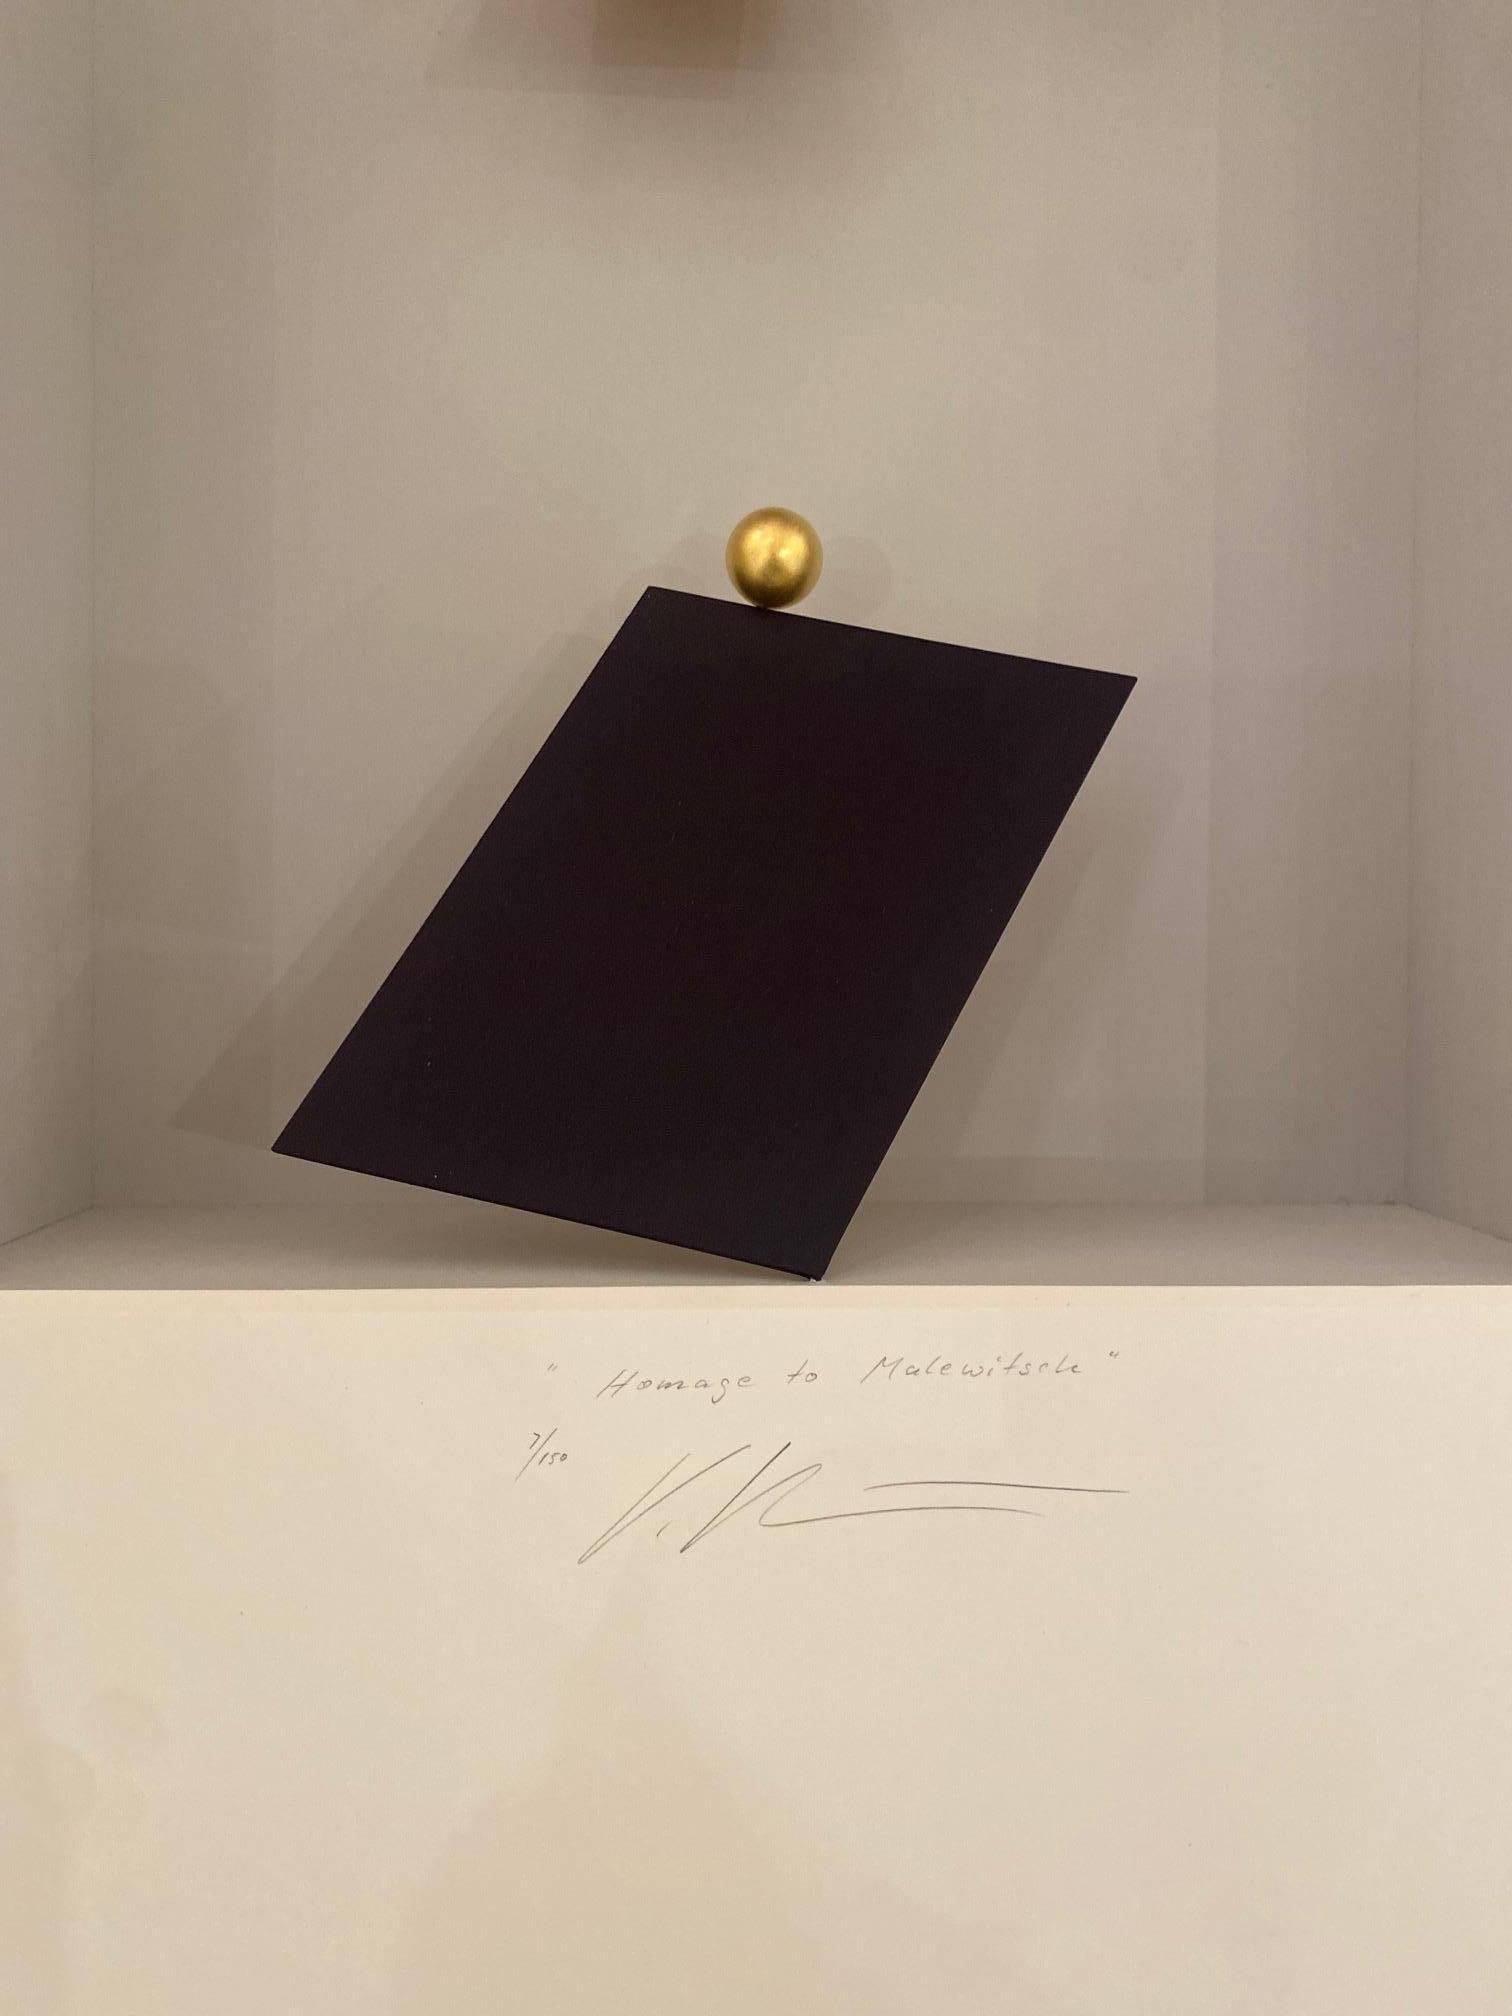 Hommage à Malewitsch - art contemporain en hommage aux boîtes de Kasimir Malewitsch - Assemblage Mixed Media Art par Volker Kuhn